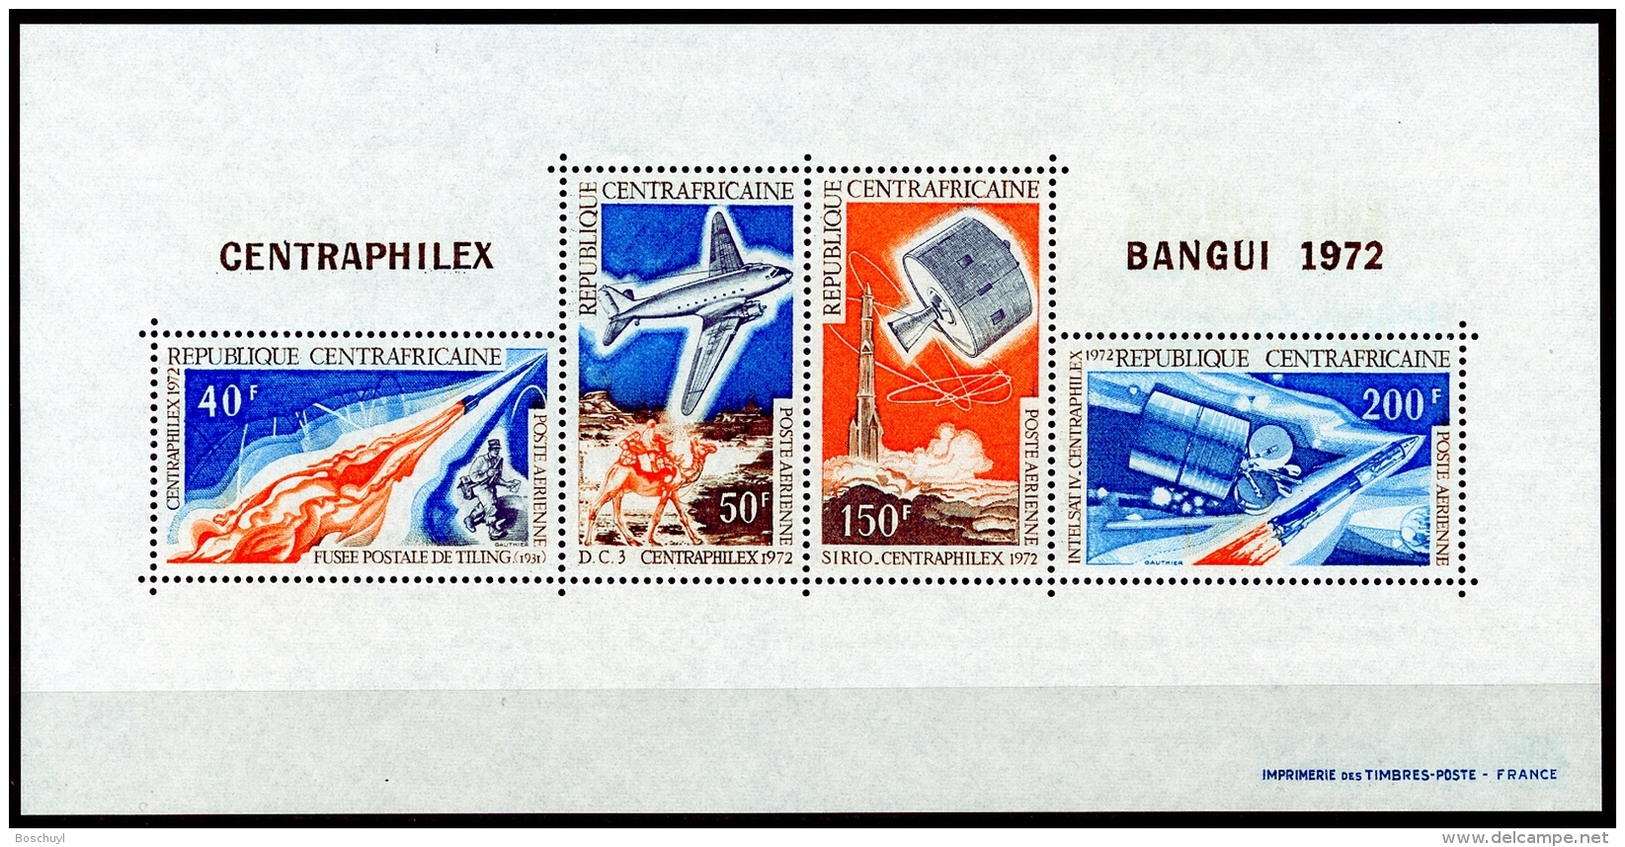 Central African Republic, 1972, Space, Airplane, Centraphilex Stamp Exhibition, MNH Sheet, Michel Block 7 - República Centroafricana